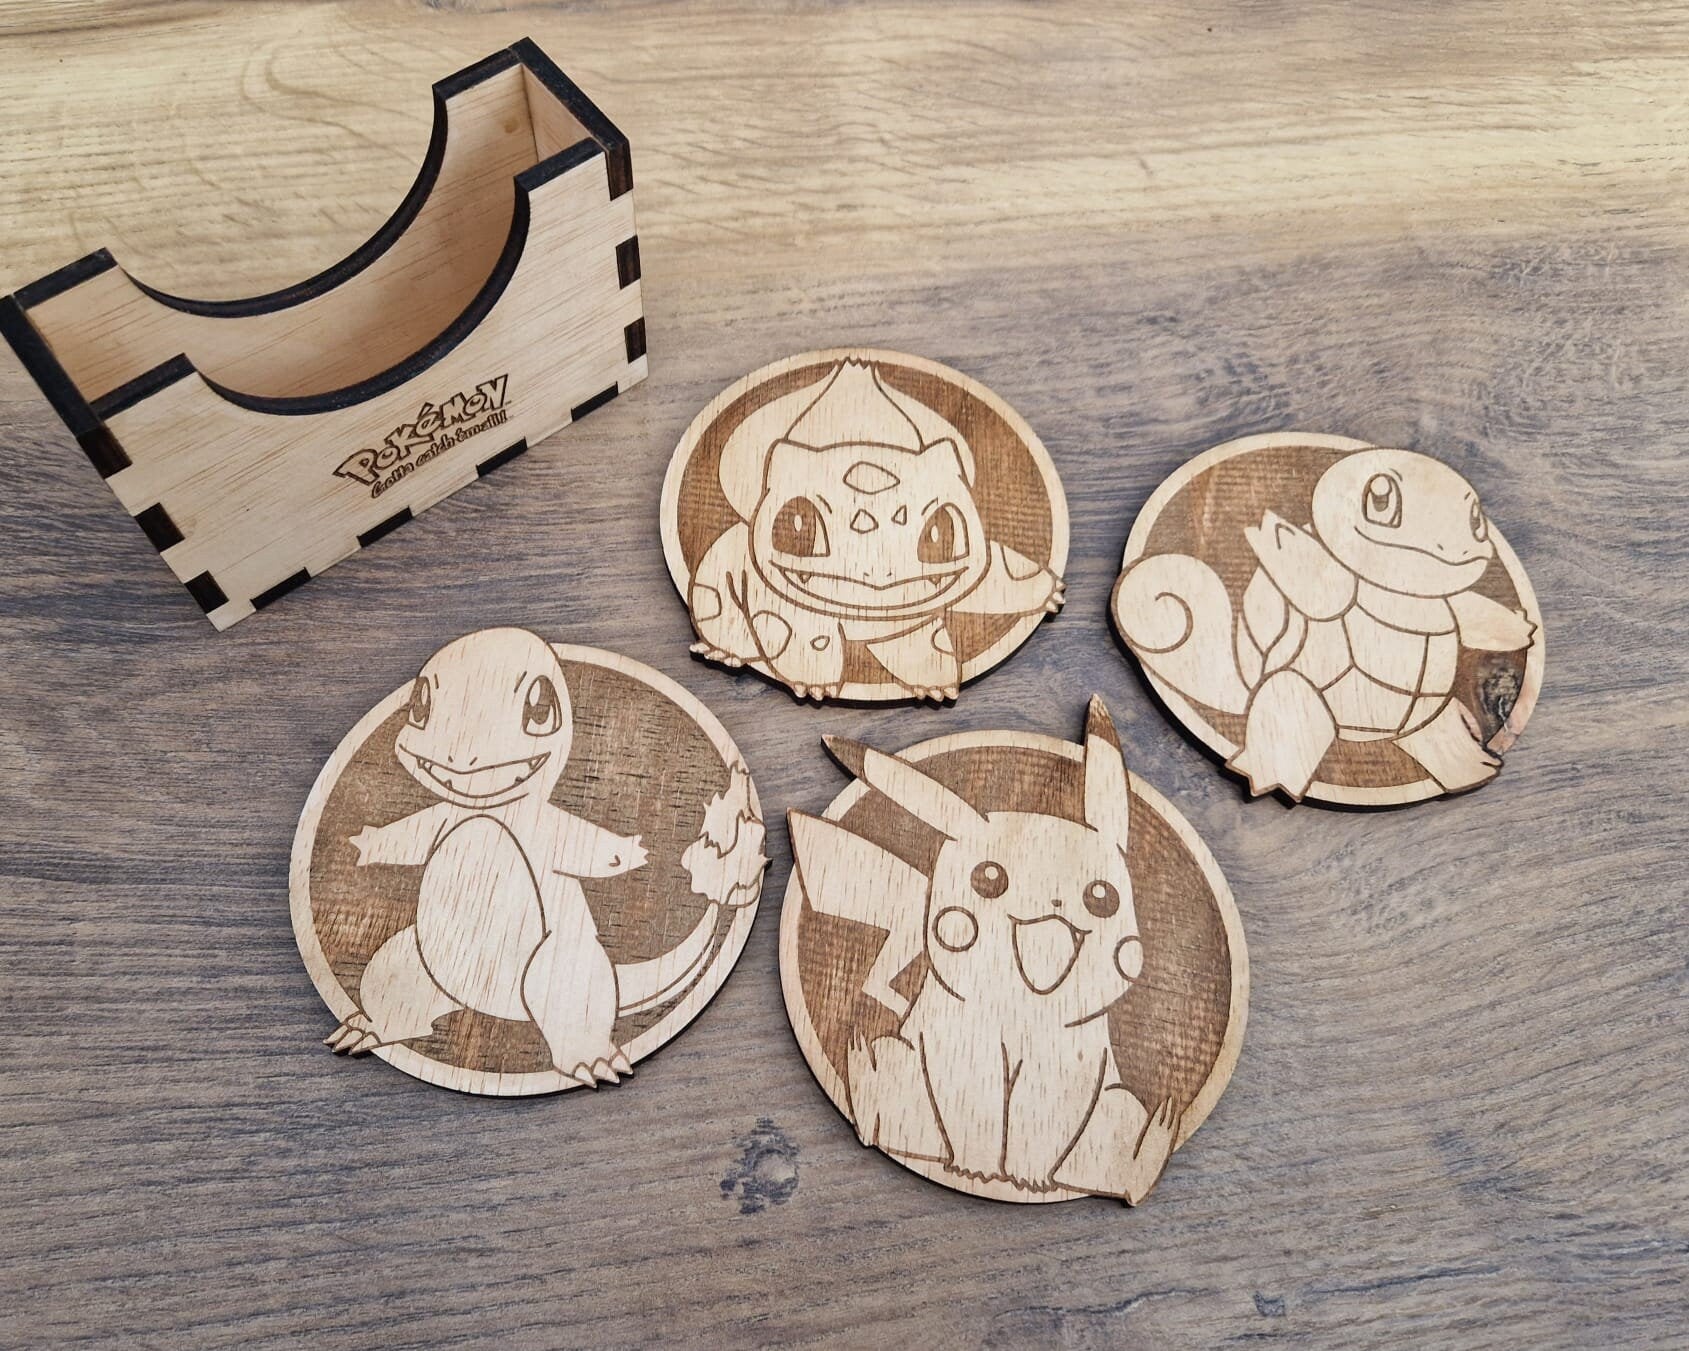 Choose Any Pokemon Coasters set! Pokemon Fan Gift - Home Decor - Present - Favorite Pokemon Coasters - Pokemon gift